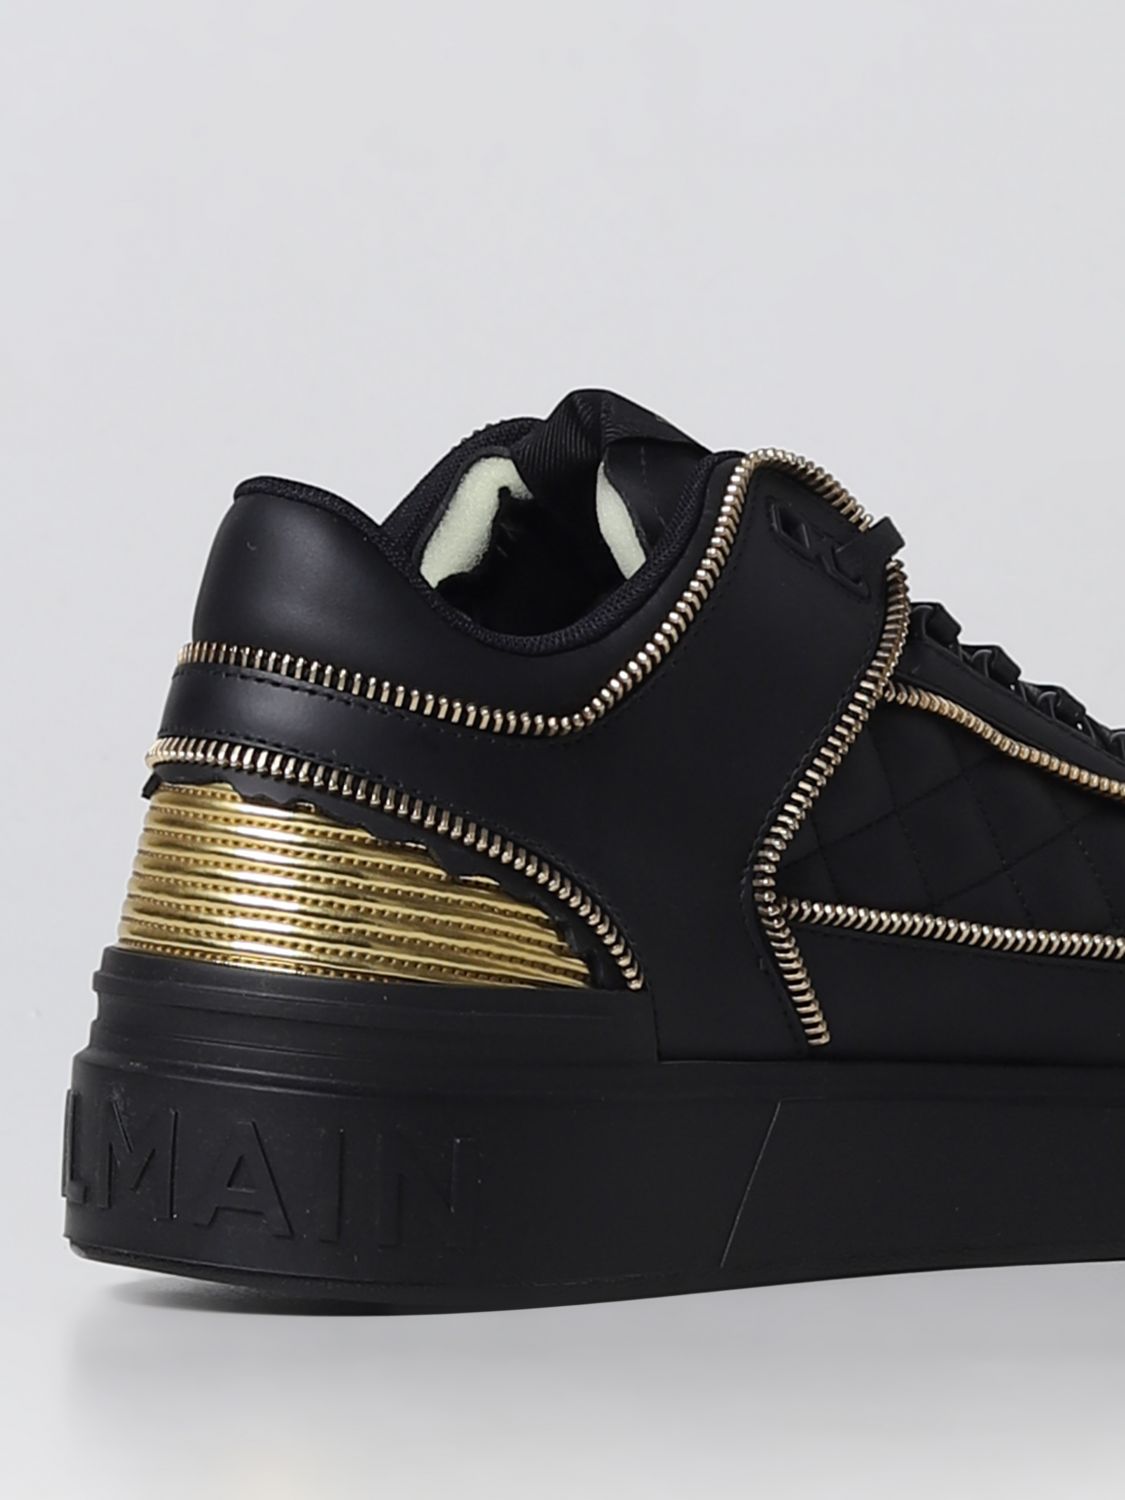 fjerkræ skrivning gidsel BALMAIN: B-Court sneakers in smooth leather - Black | Balmain sneakers  AM1VI304LRTZ online at GIGLIO.COM